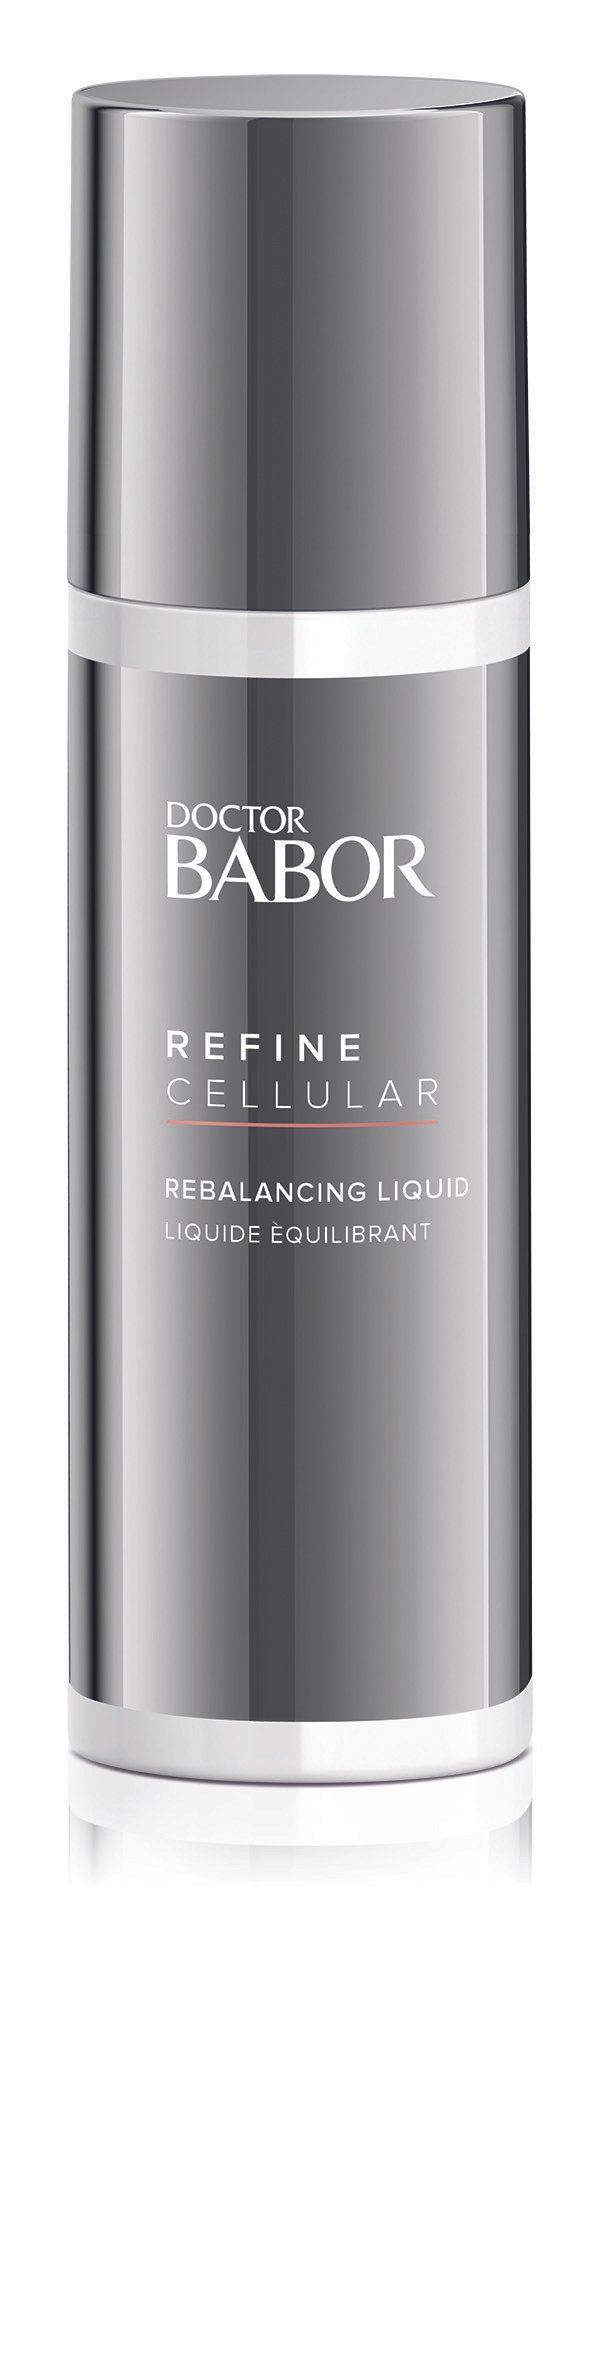 BABOR REFINE CELLULAR Rebalancing Liquid 200 ml